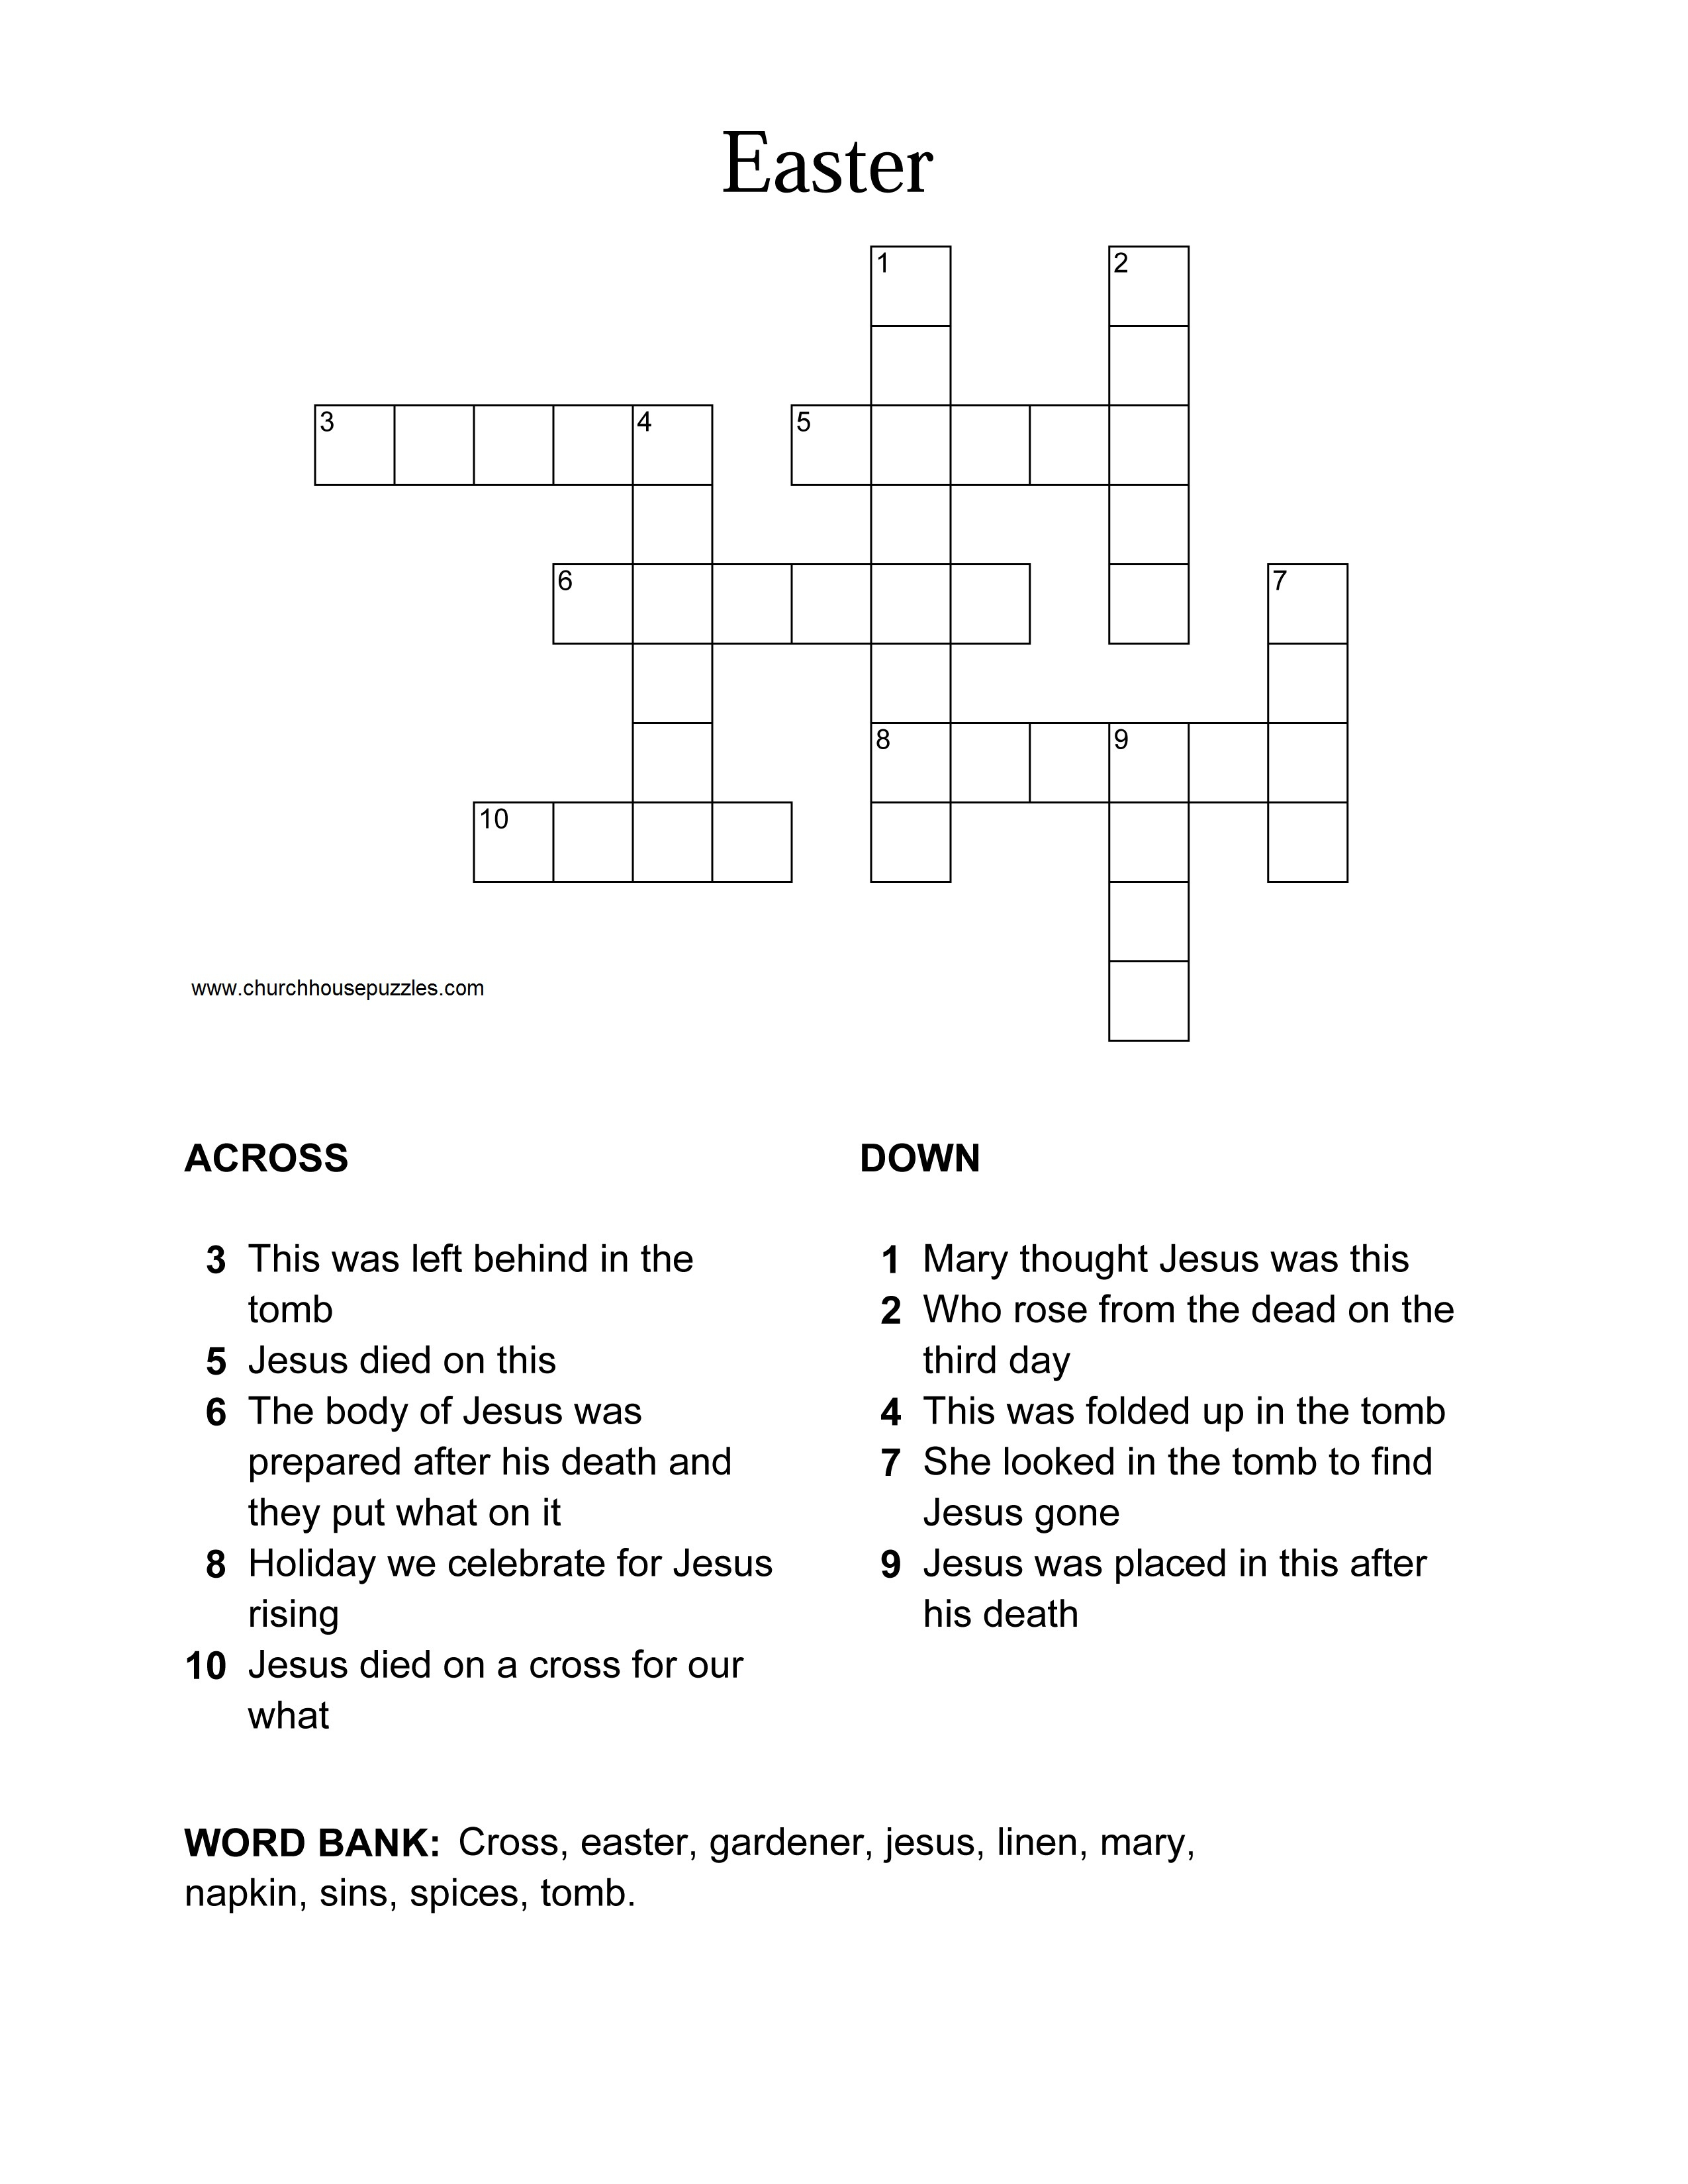 Easter Crossword Puzzle - Printable Crossword Easter